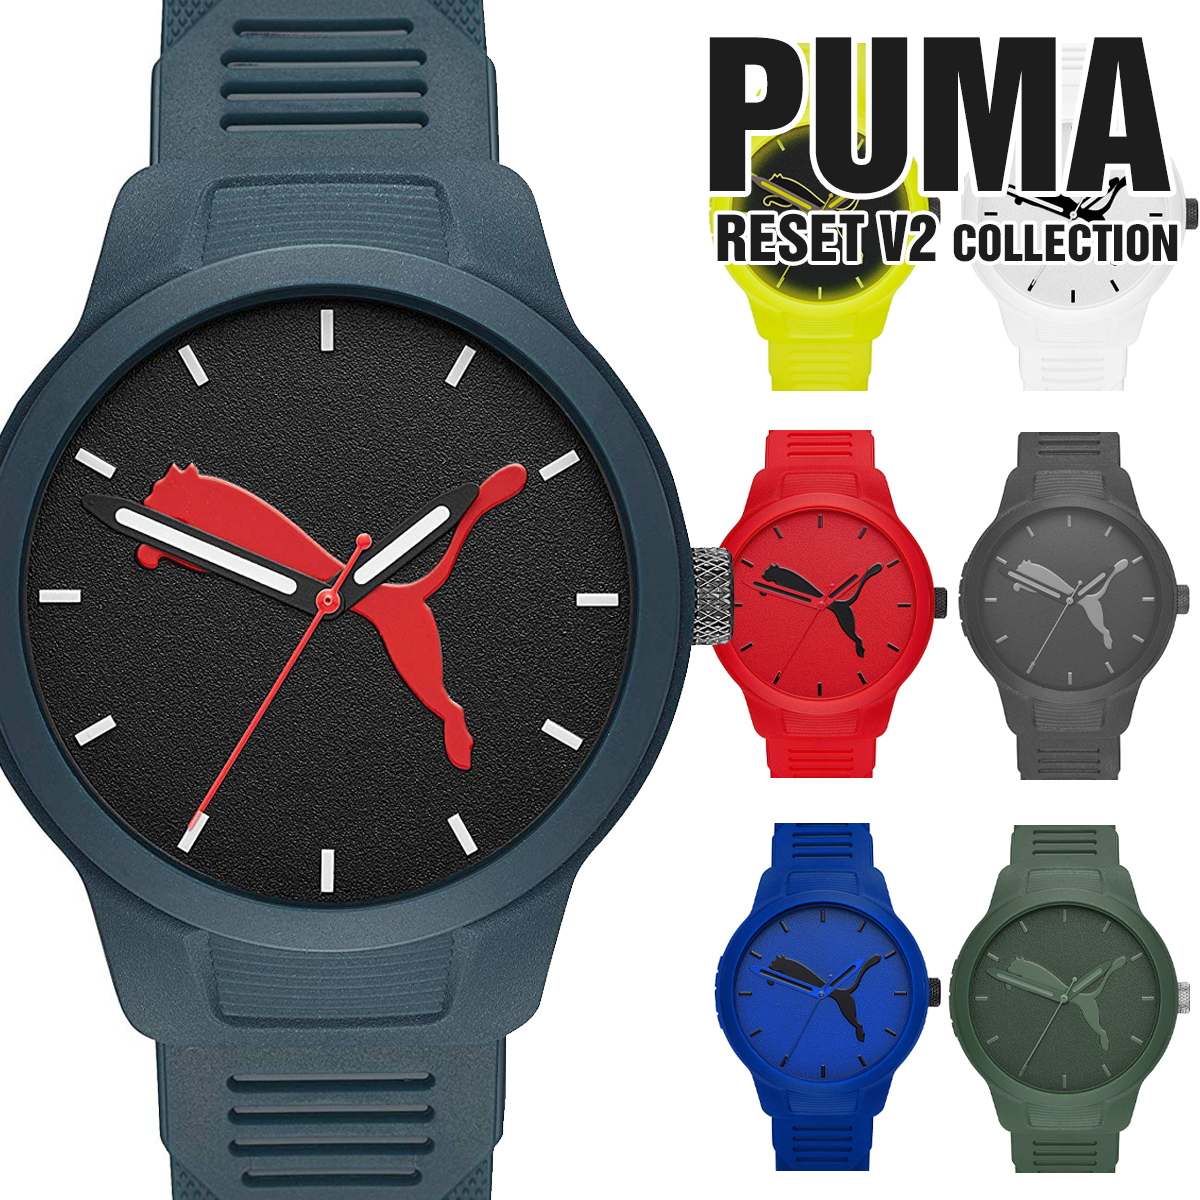 puma watches kuwait